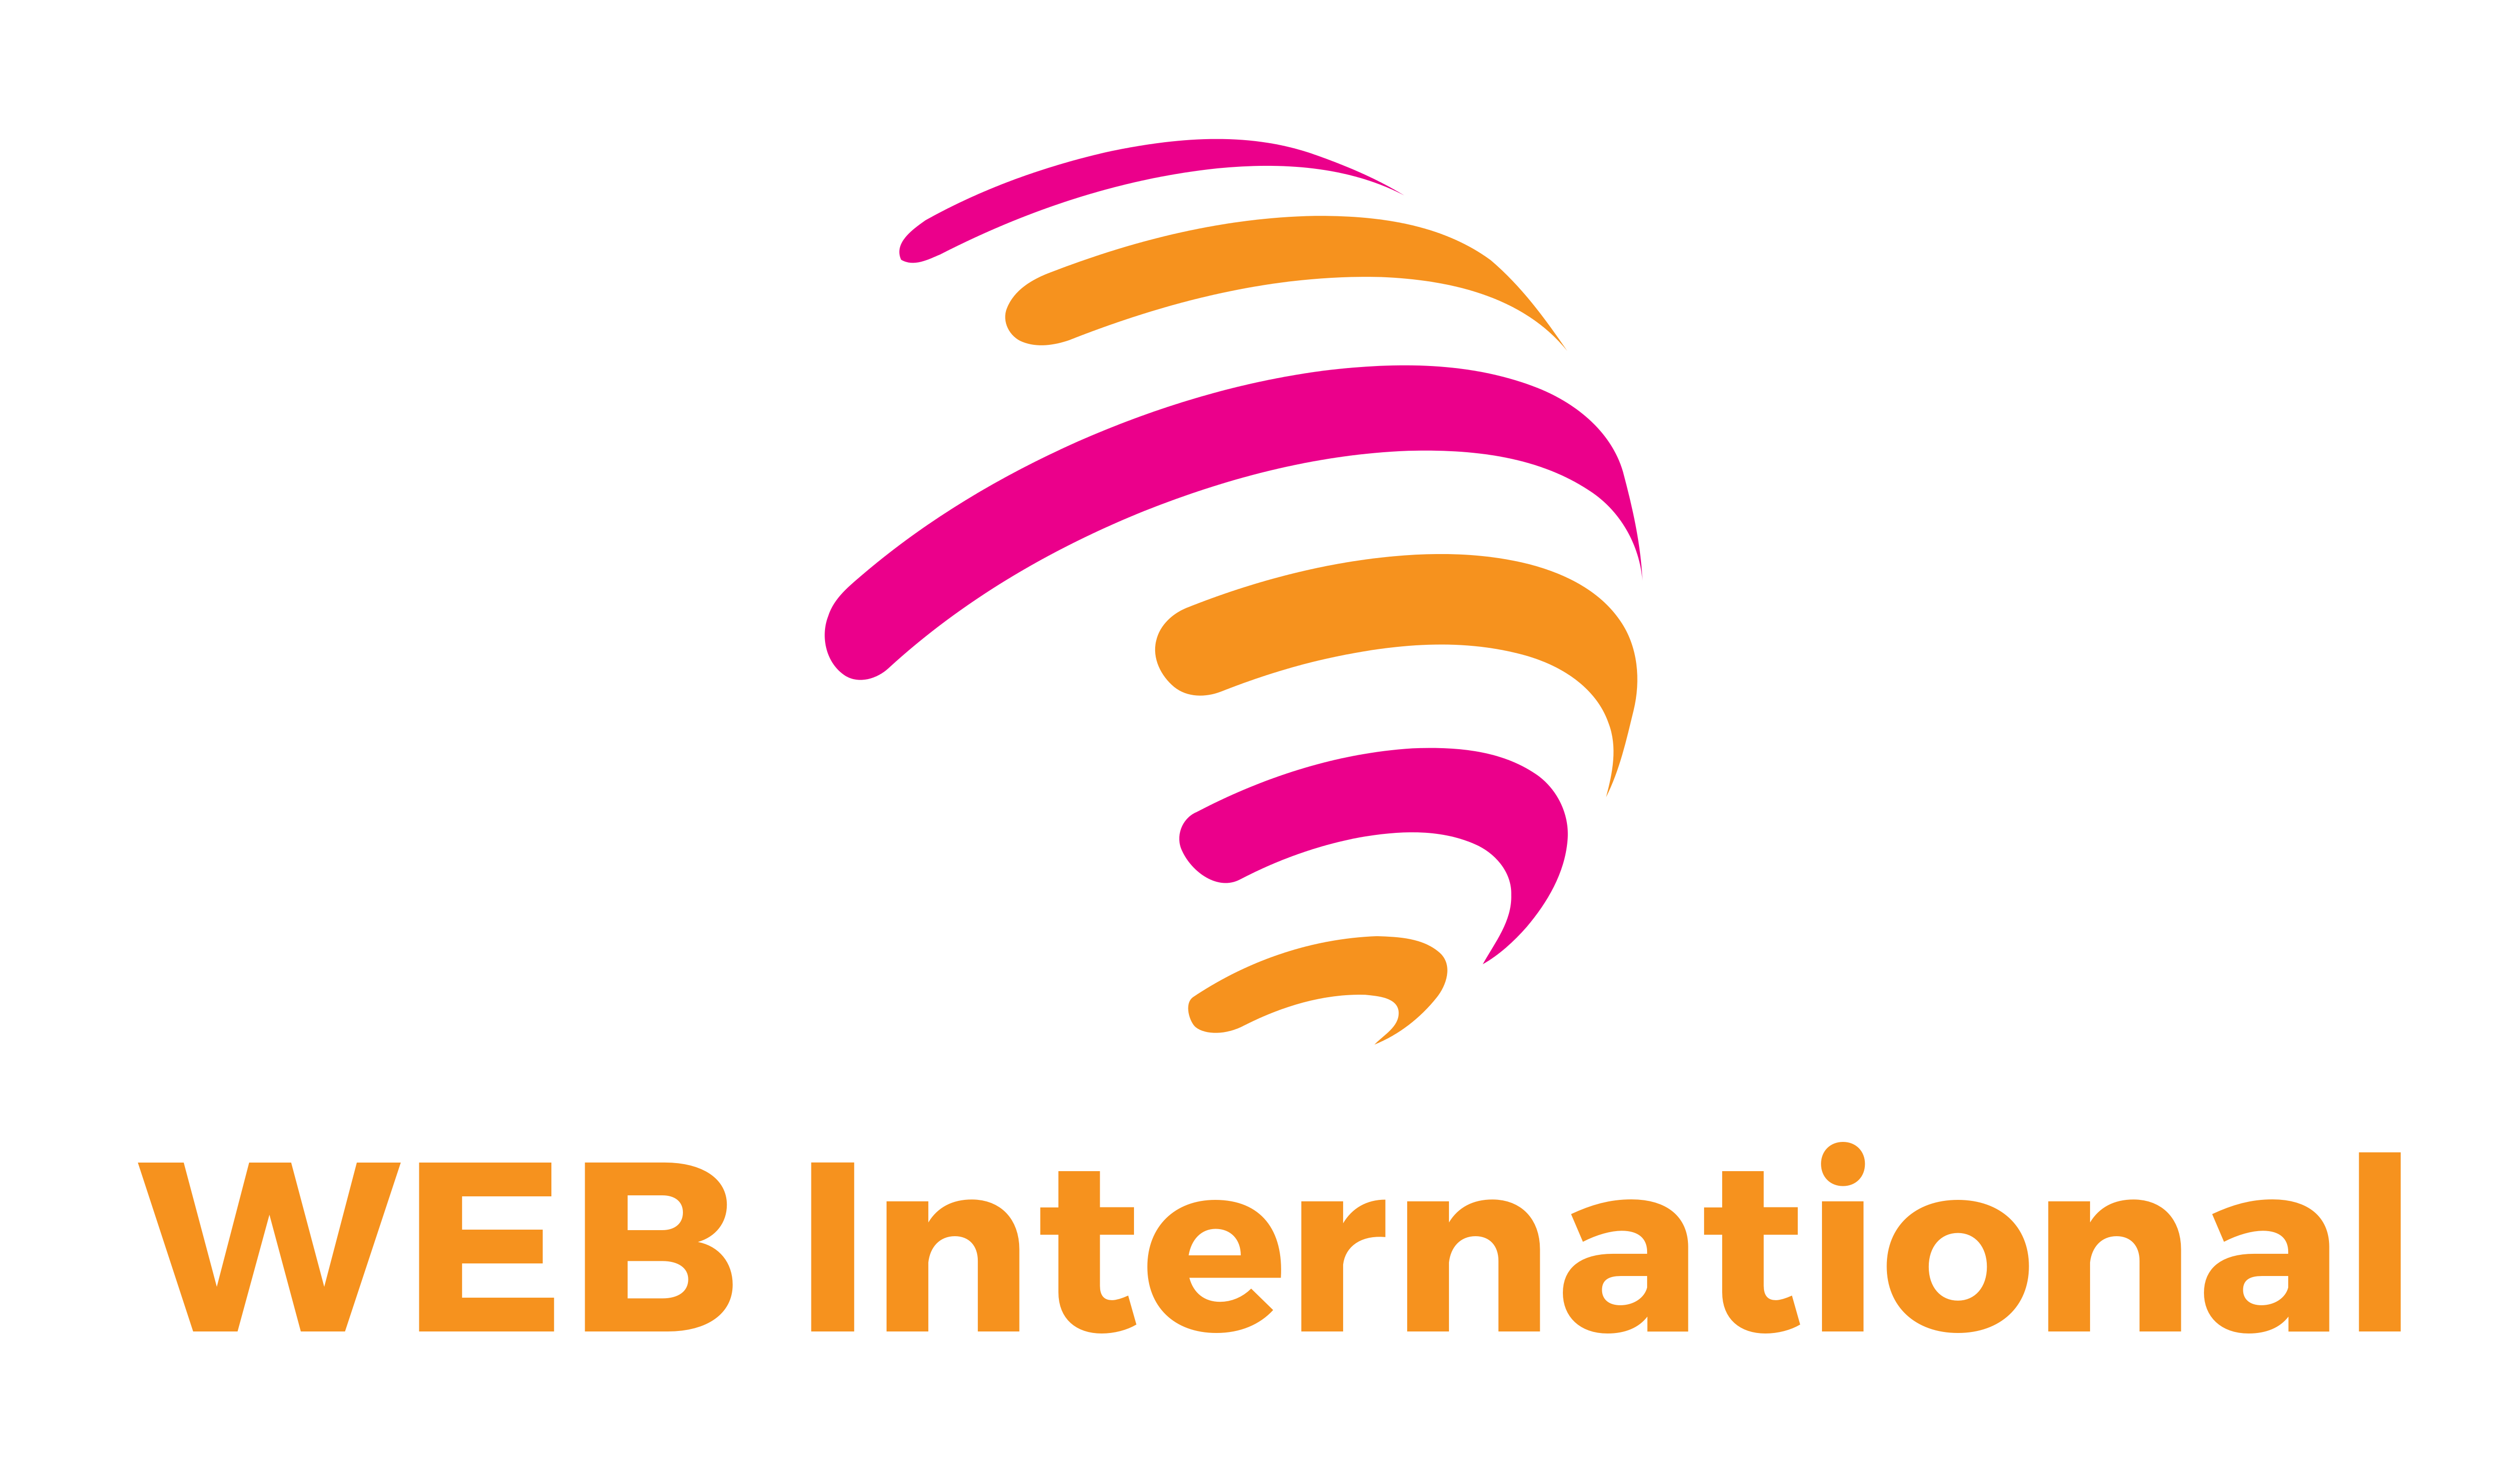 W.E.B. International